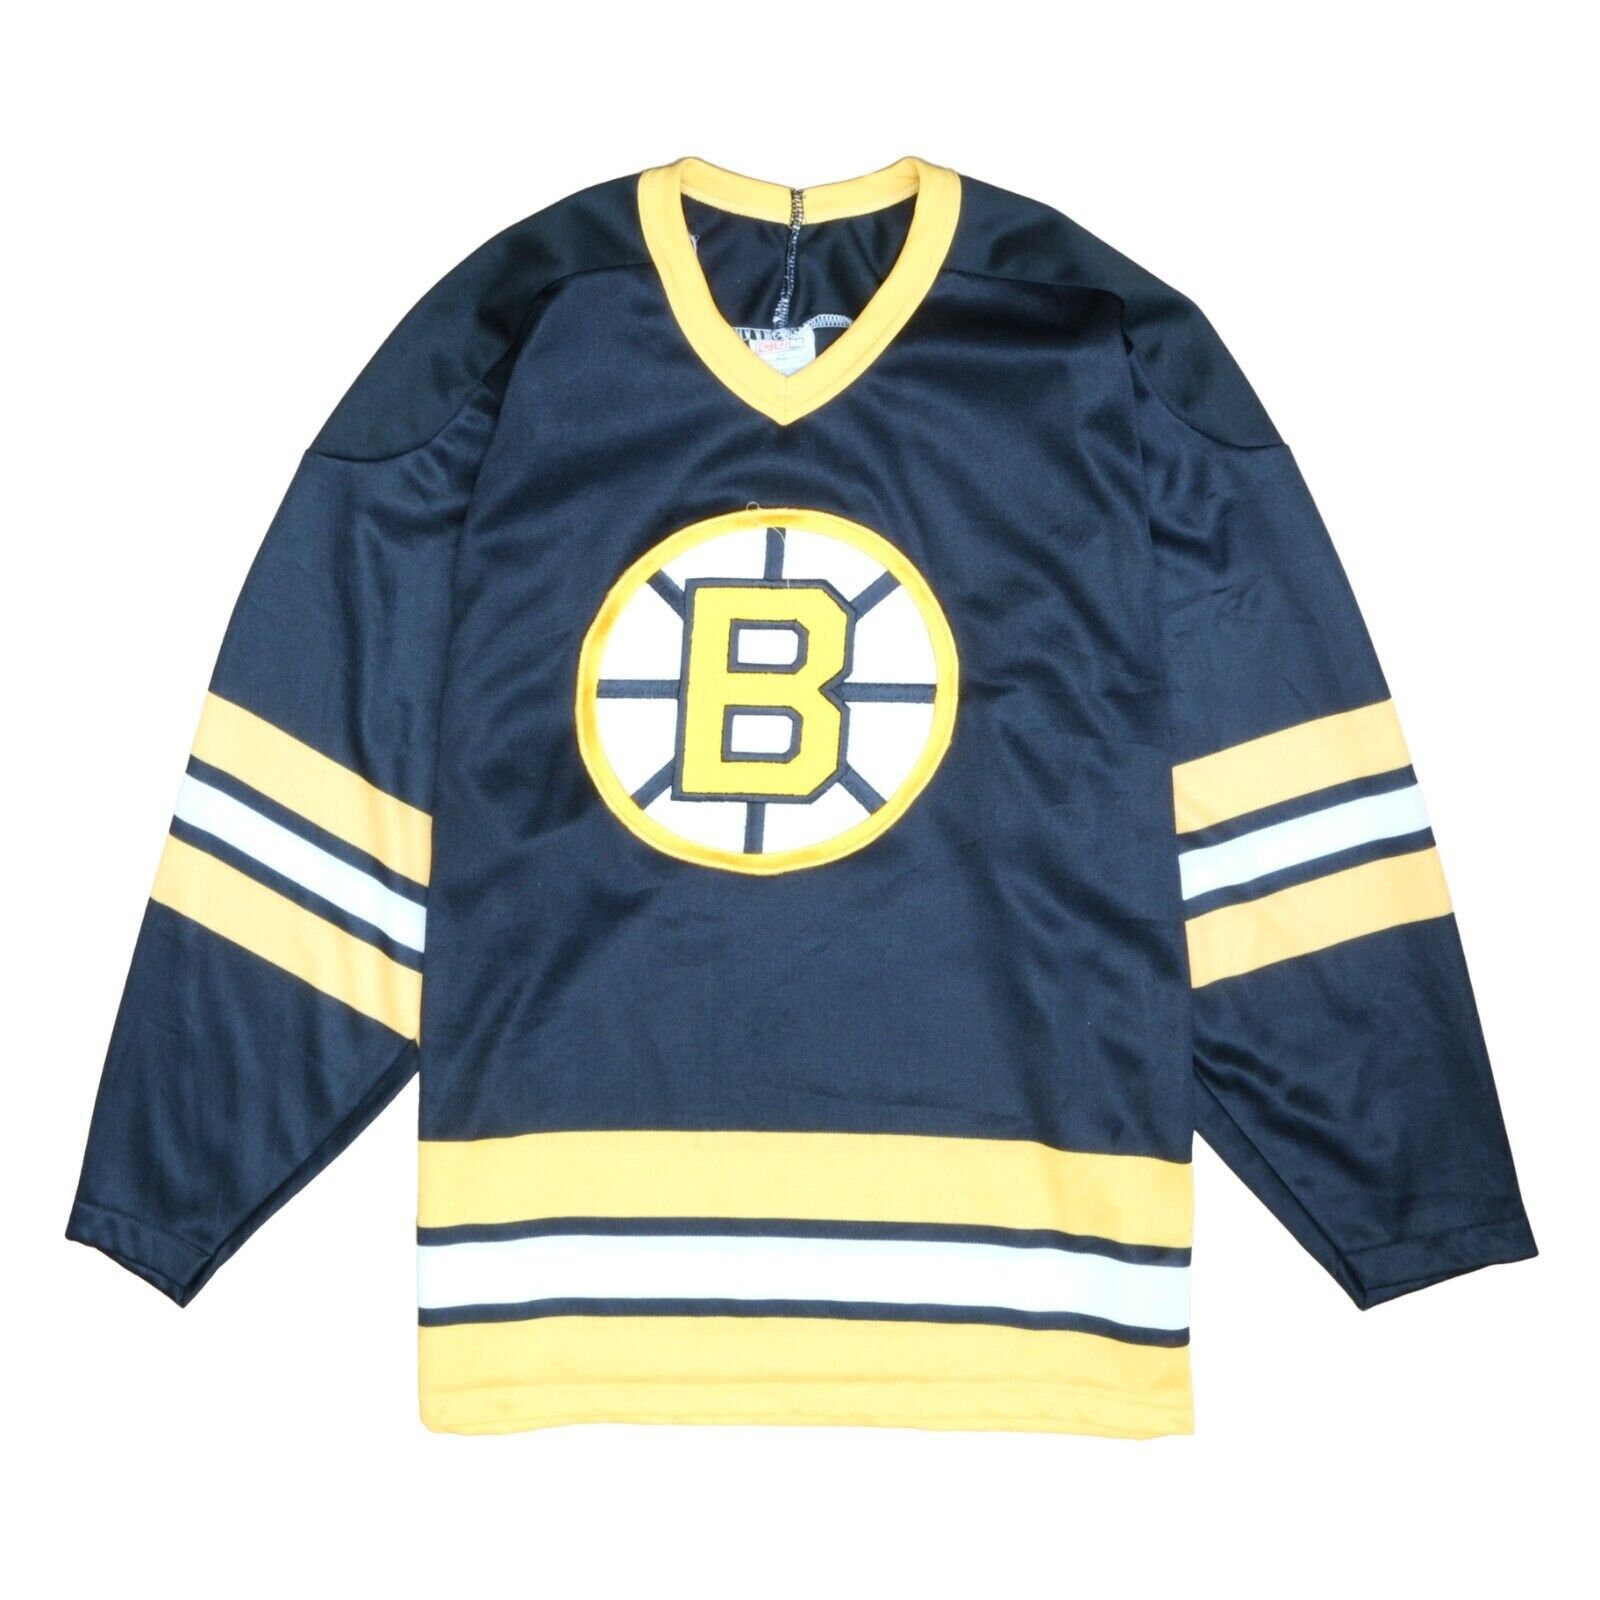 CustomCat Boston Bruins 1990's Vintage NHL Crewneck Sweatshirt Black / 5XL